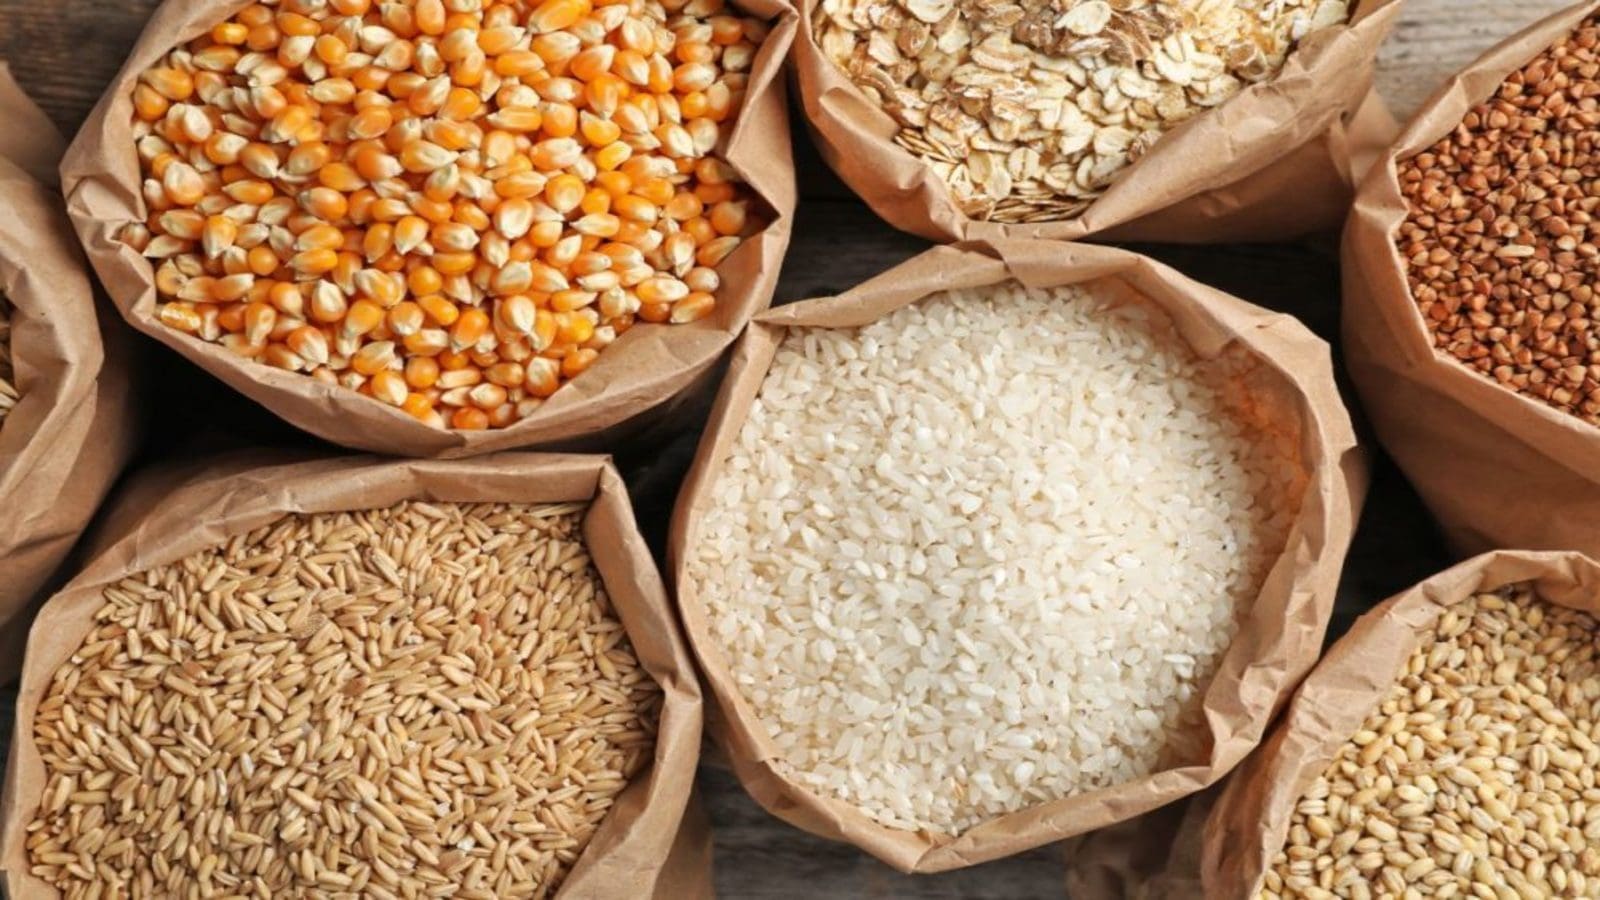 Nigerian government initiates nationwide grain distribution to alleviate hardship